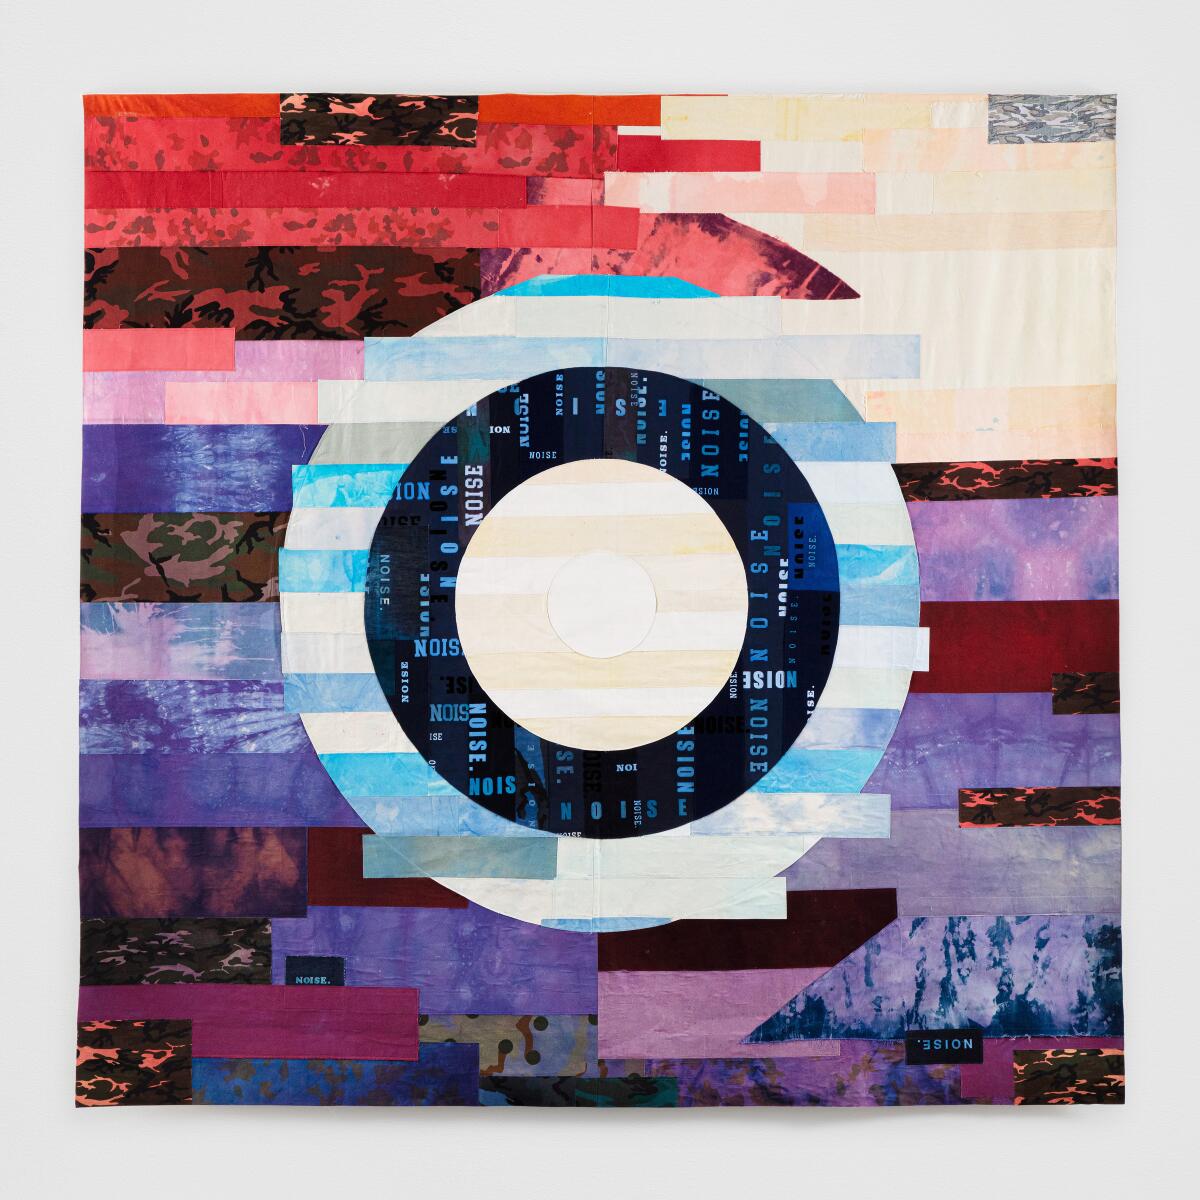 Doug Aitken's fabric work "Target" at Regen Projects